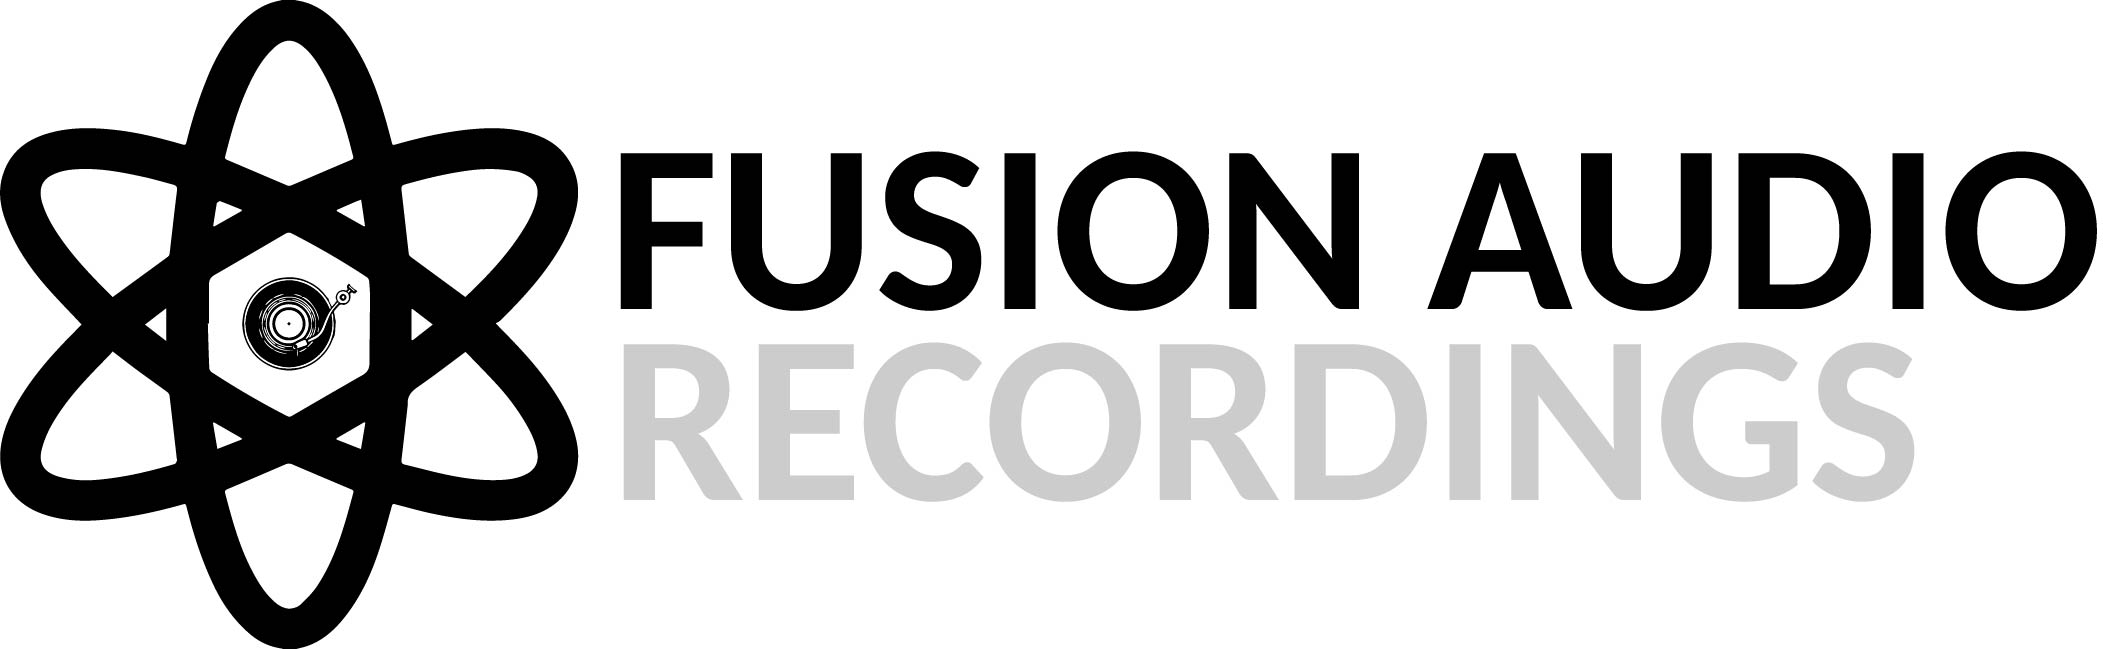 Fusion Audio Recordings logo